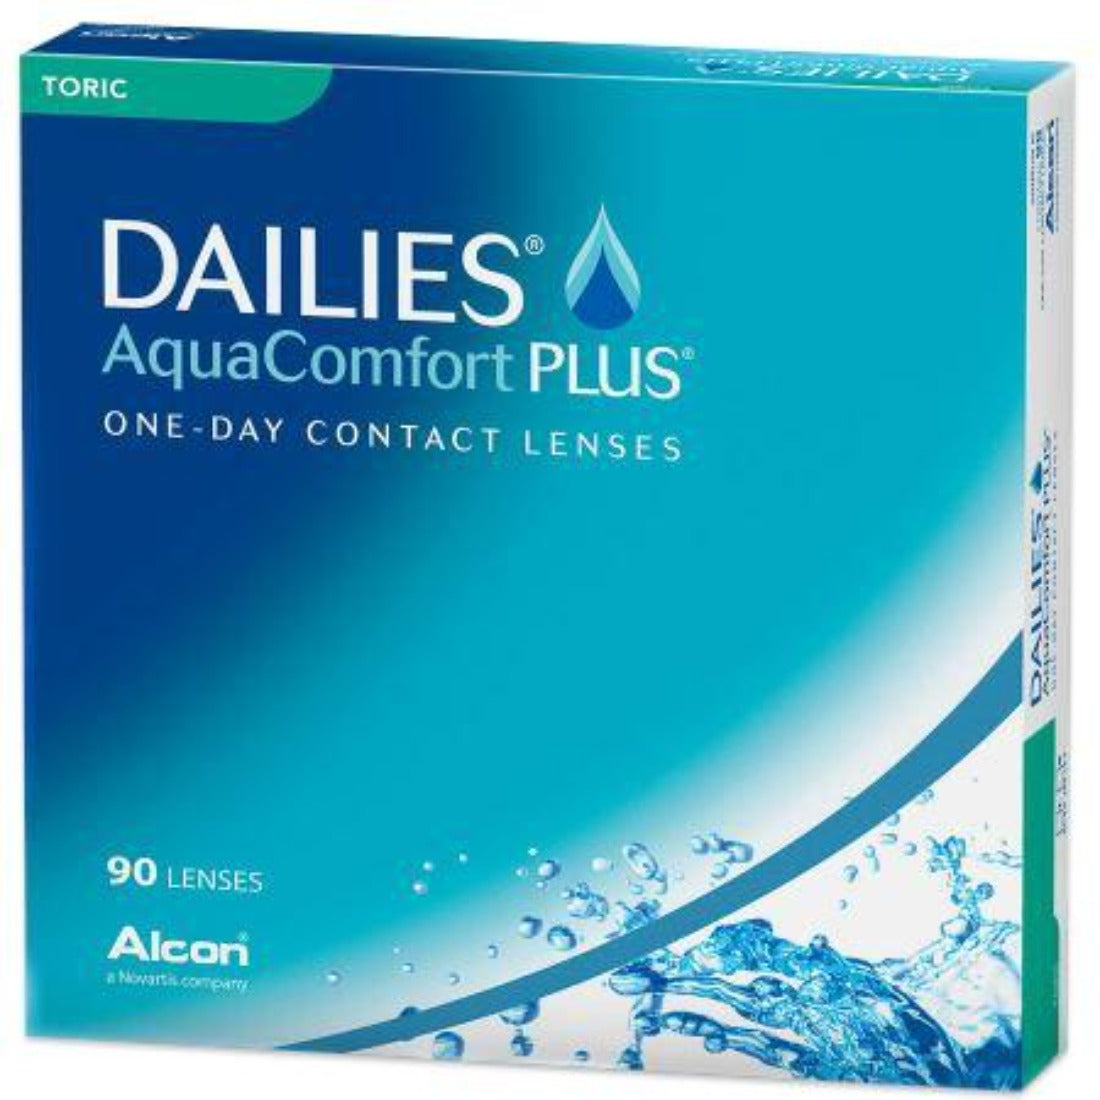 dailies-aquacomfort-plus-toric-90pk-daily-contact-lenses-alcon